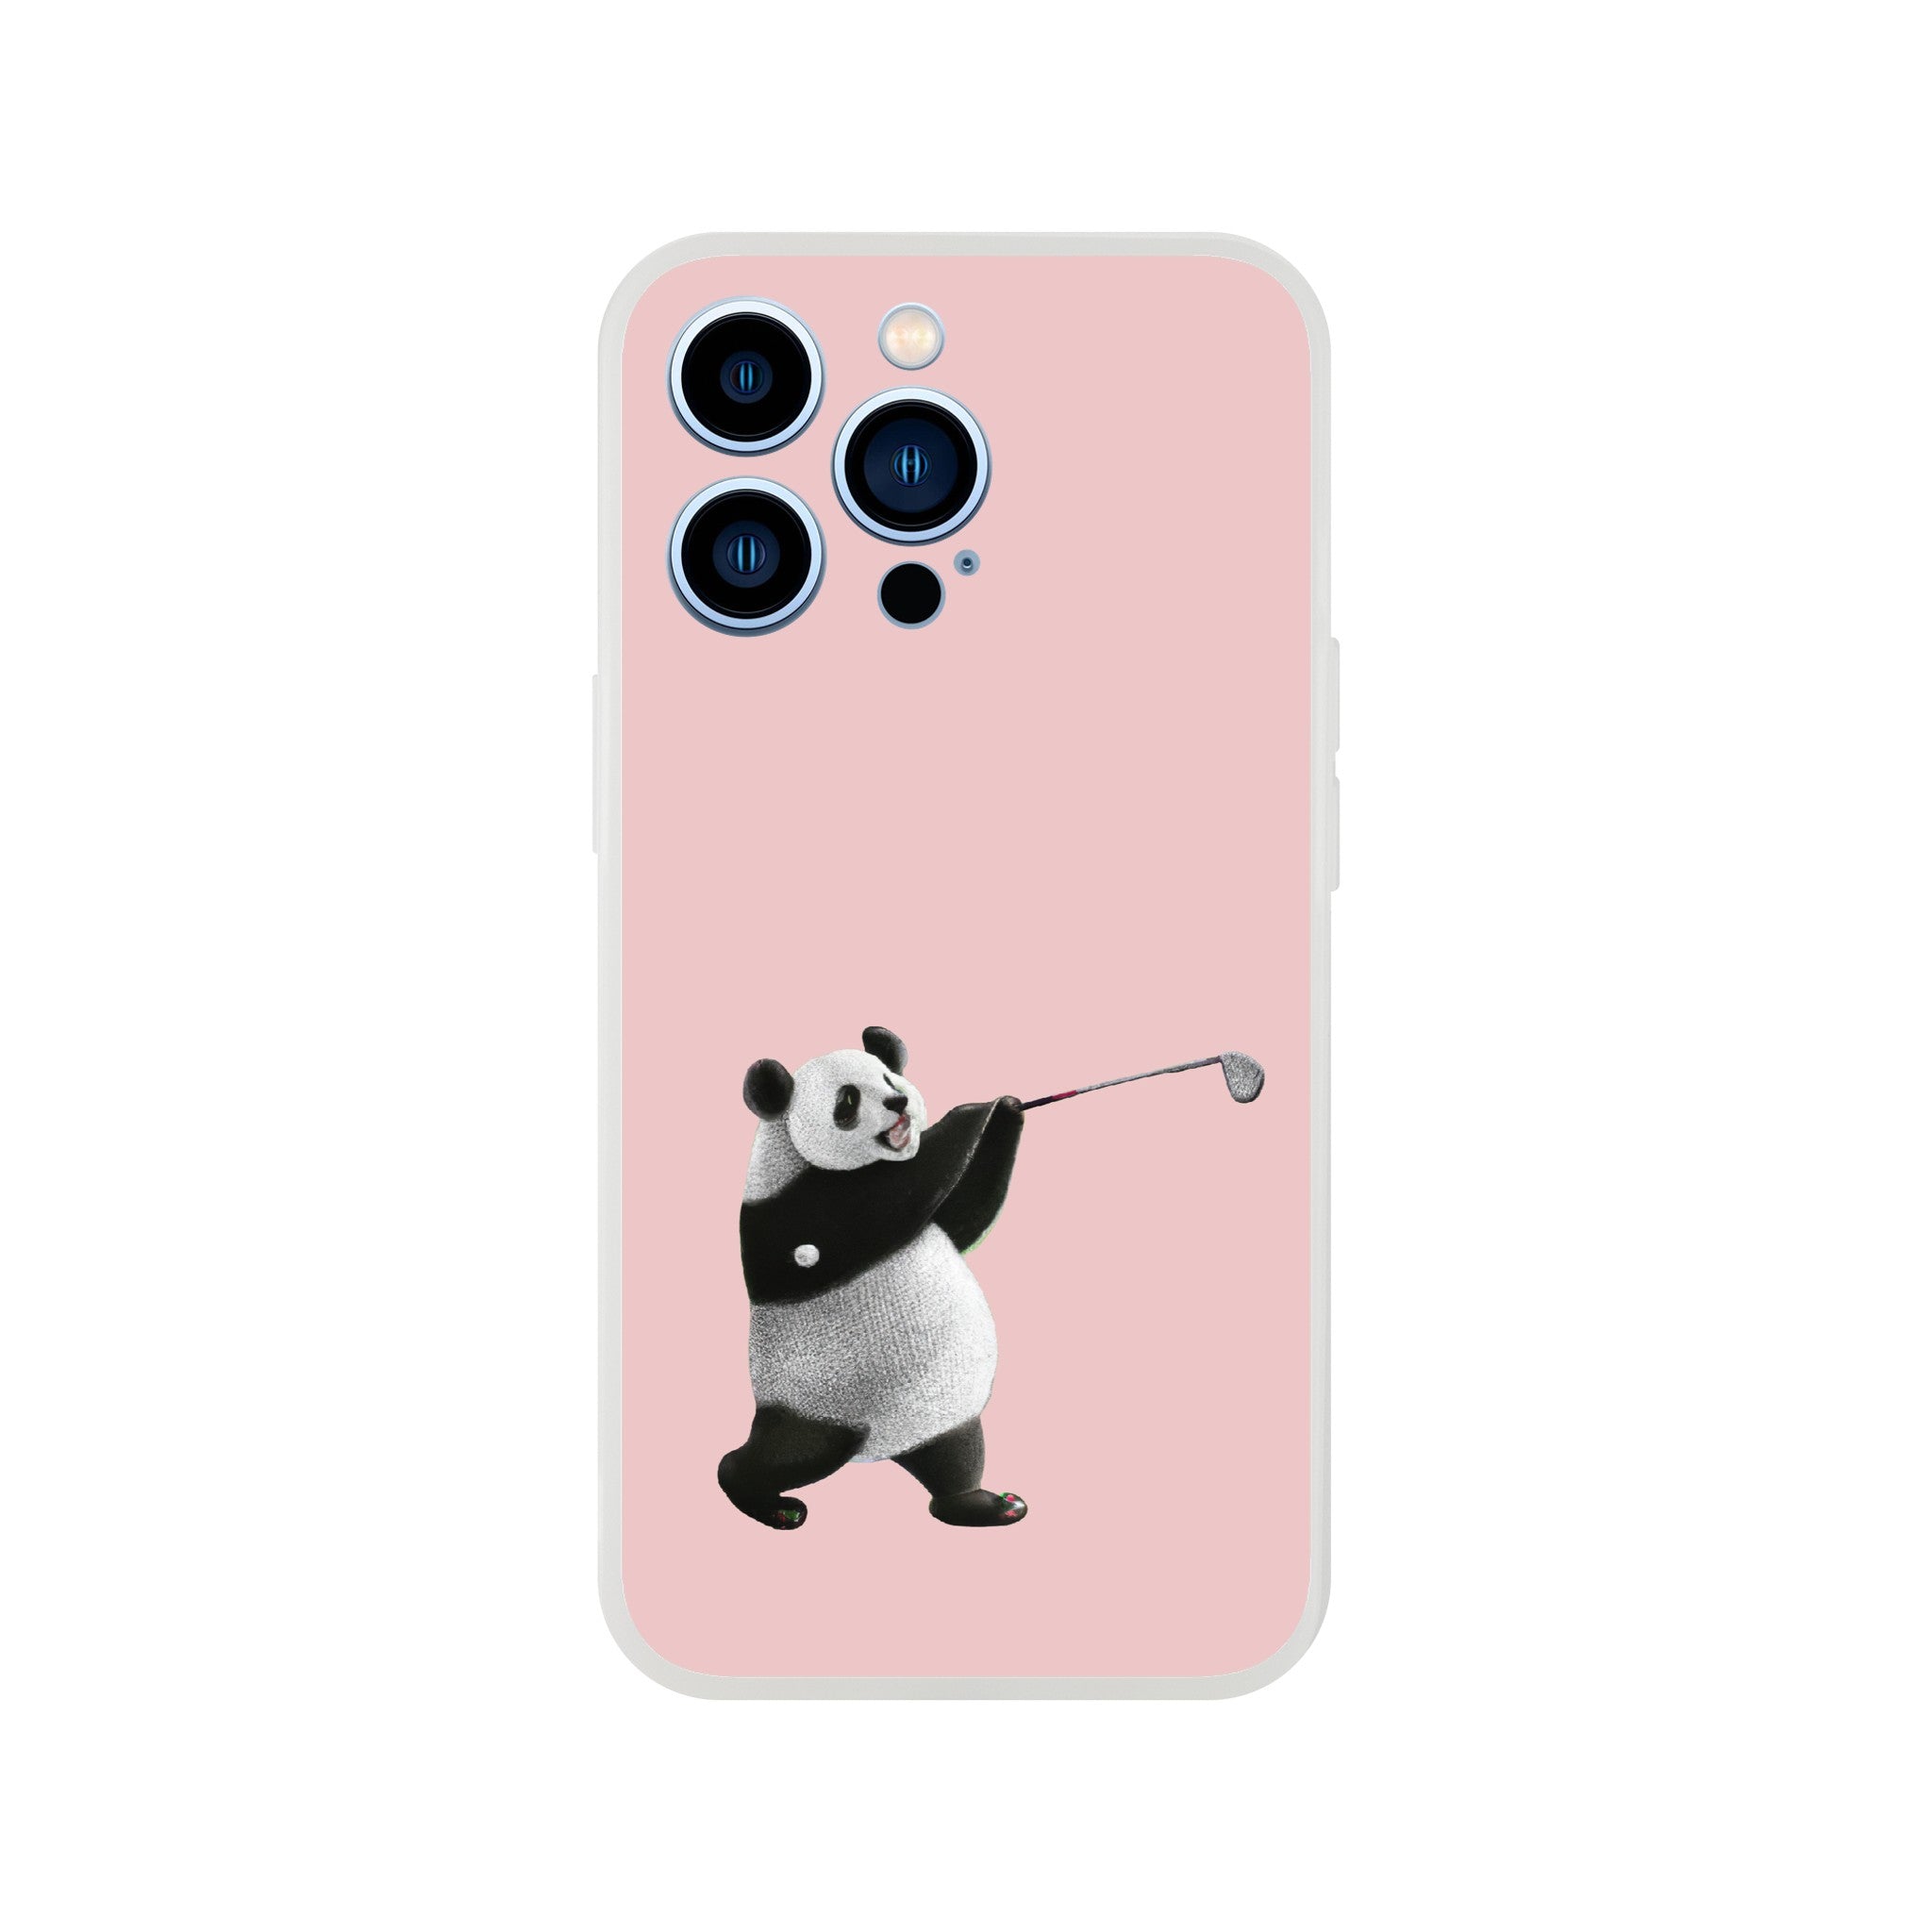 Smerig Kanon Van iPhone / Samsung phone cover - Panda playing golf – Artful Impressions